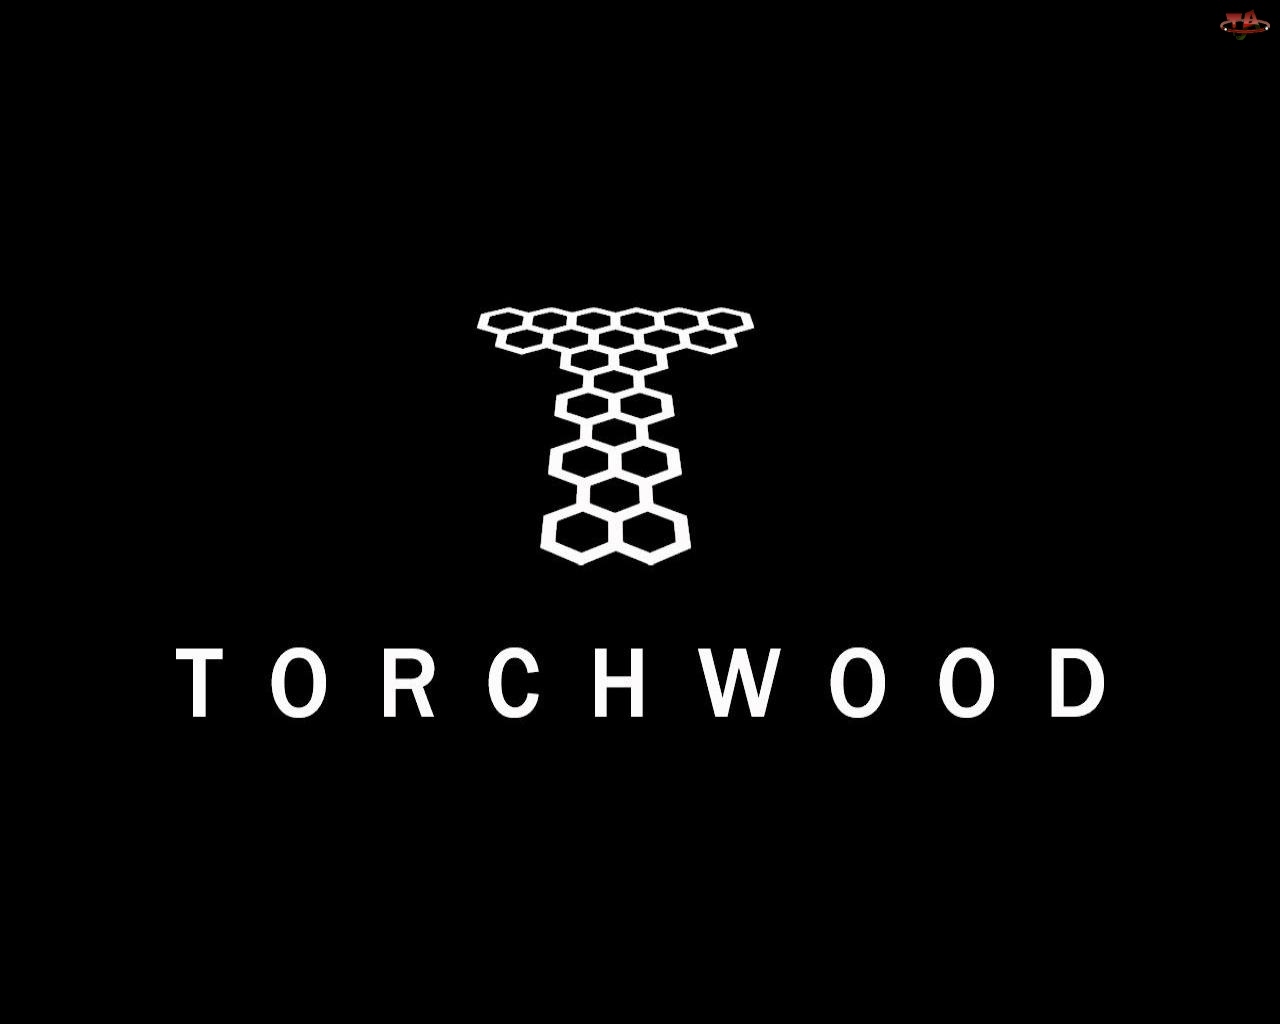 Serial, Torchwood